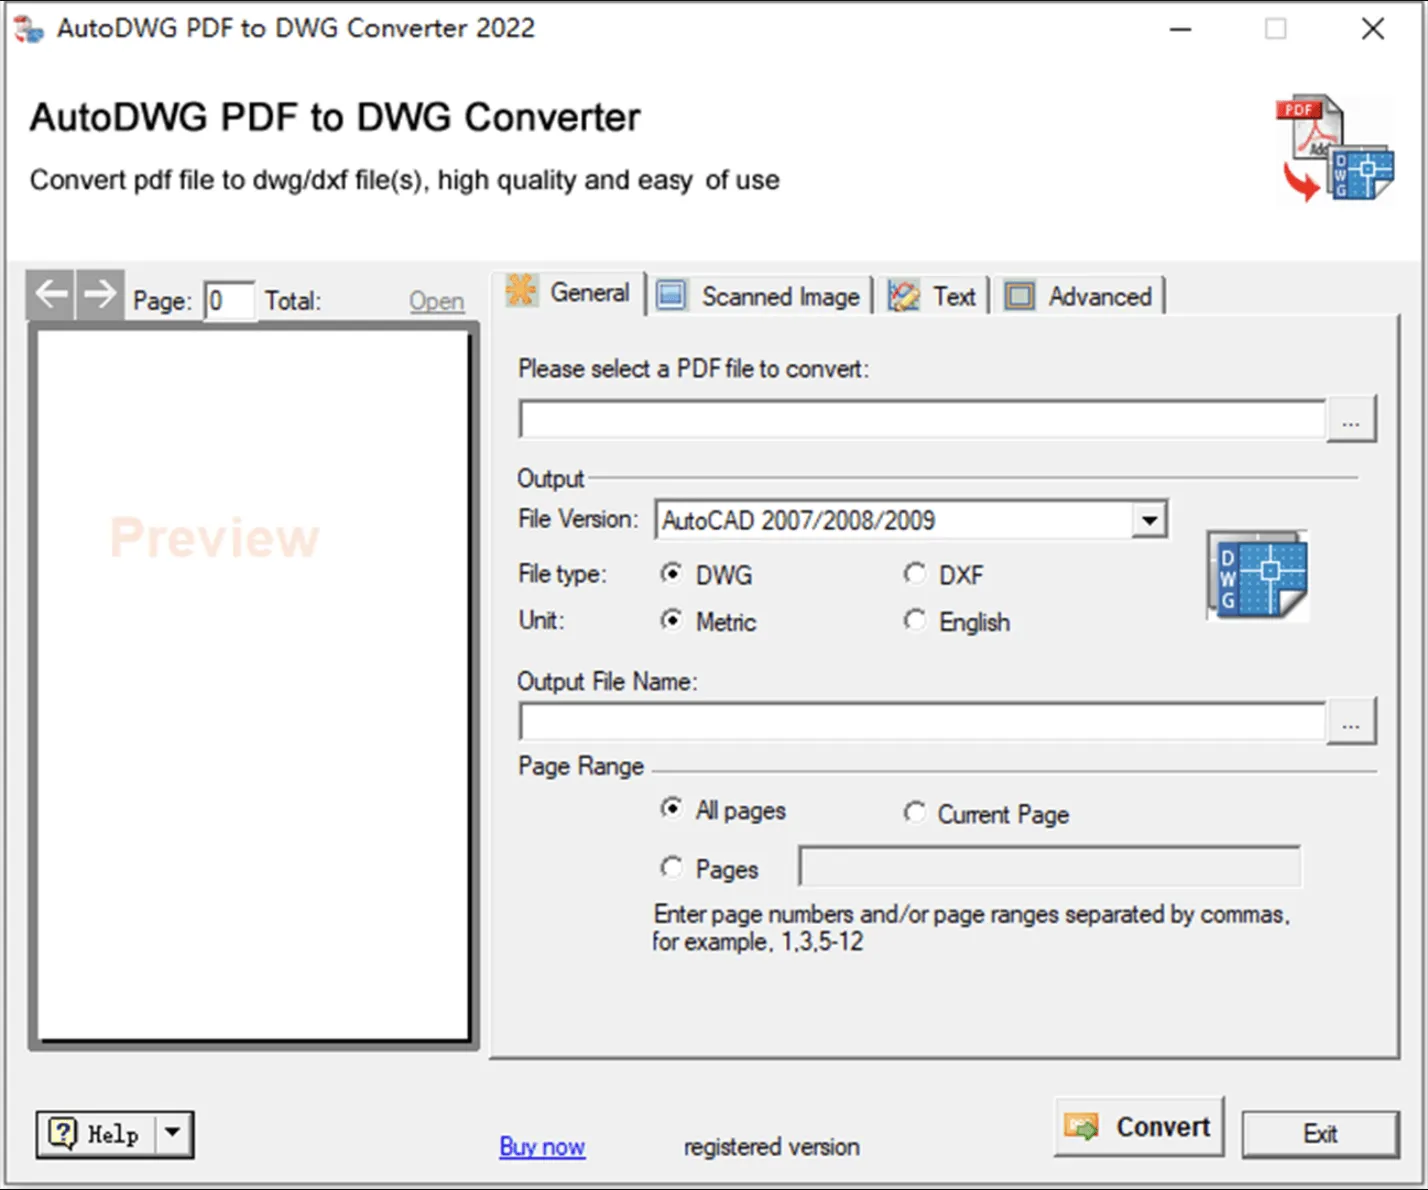 AutoDWG PDF to DWF Converter